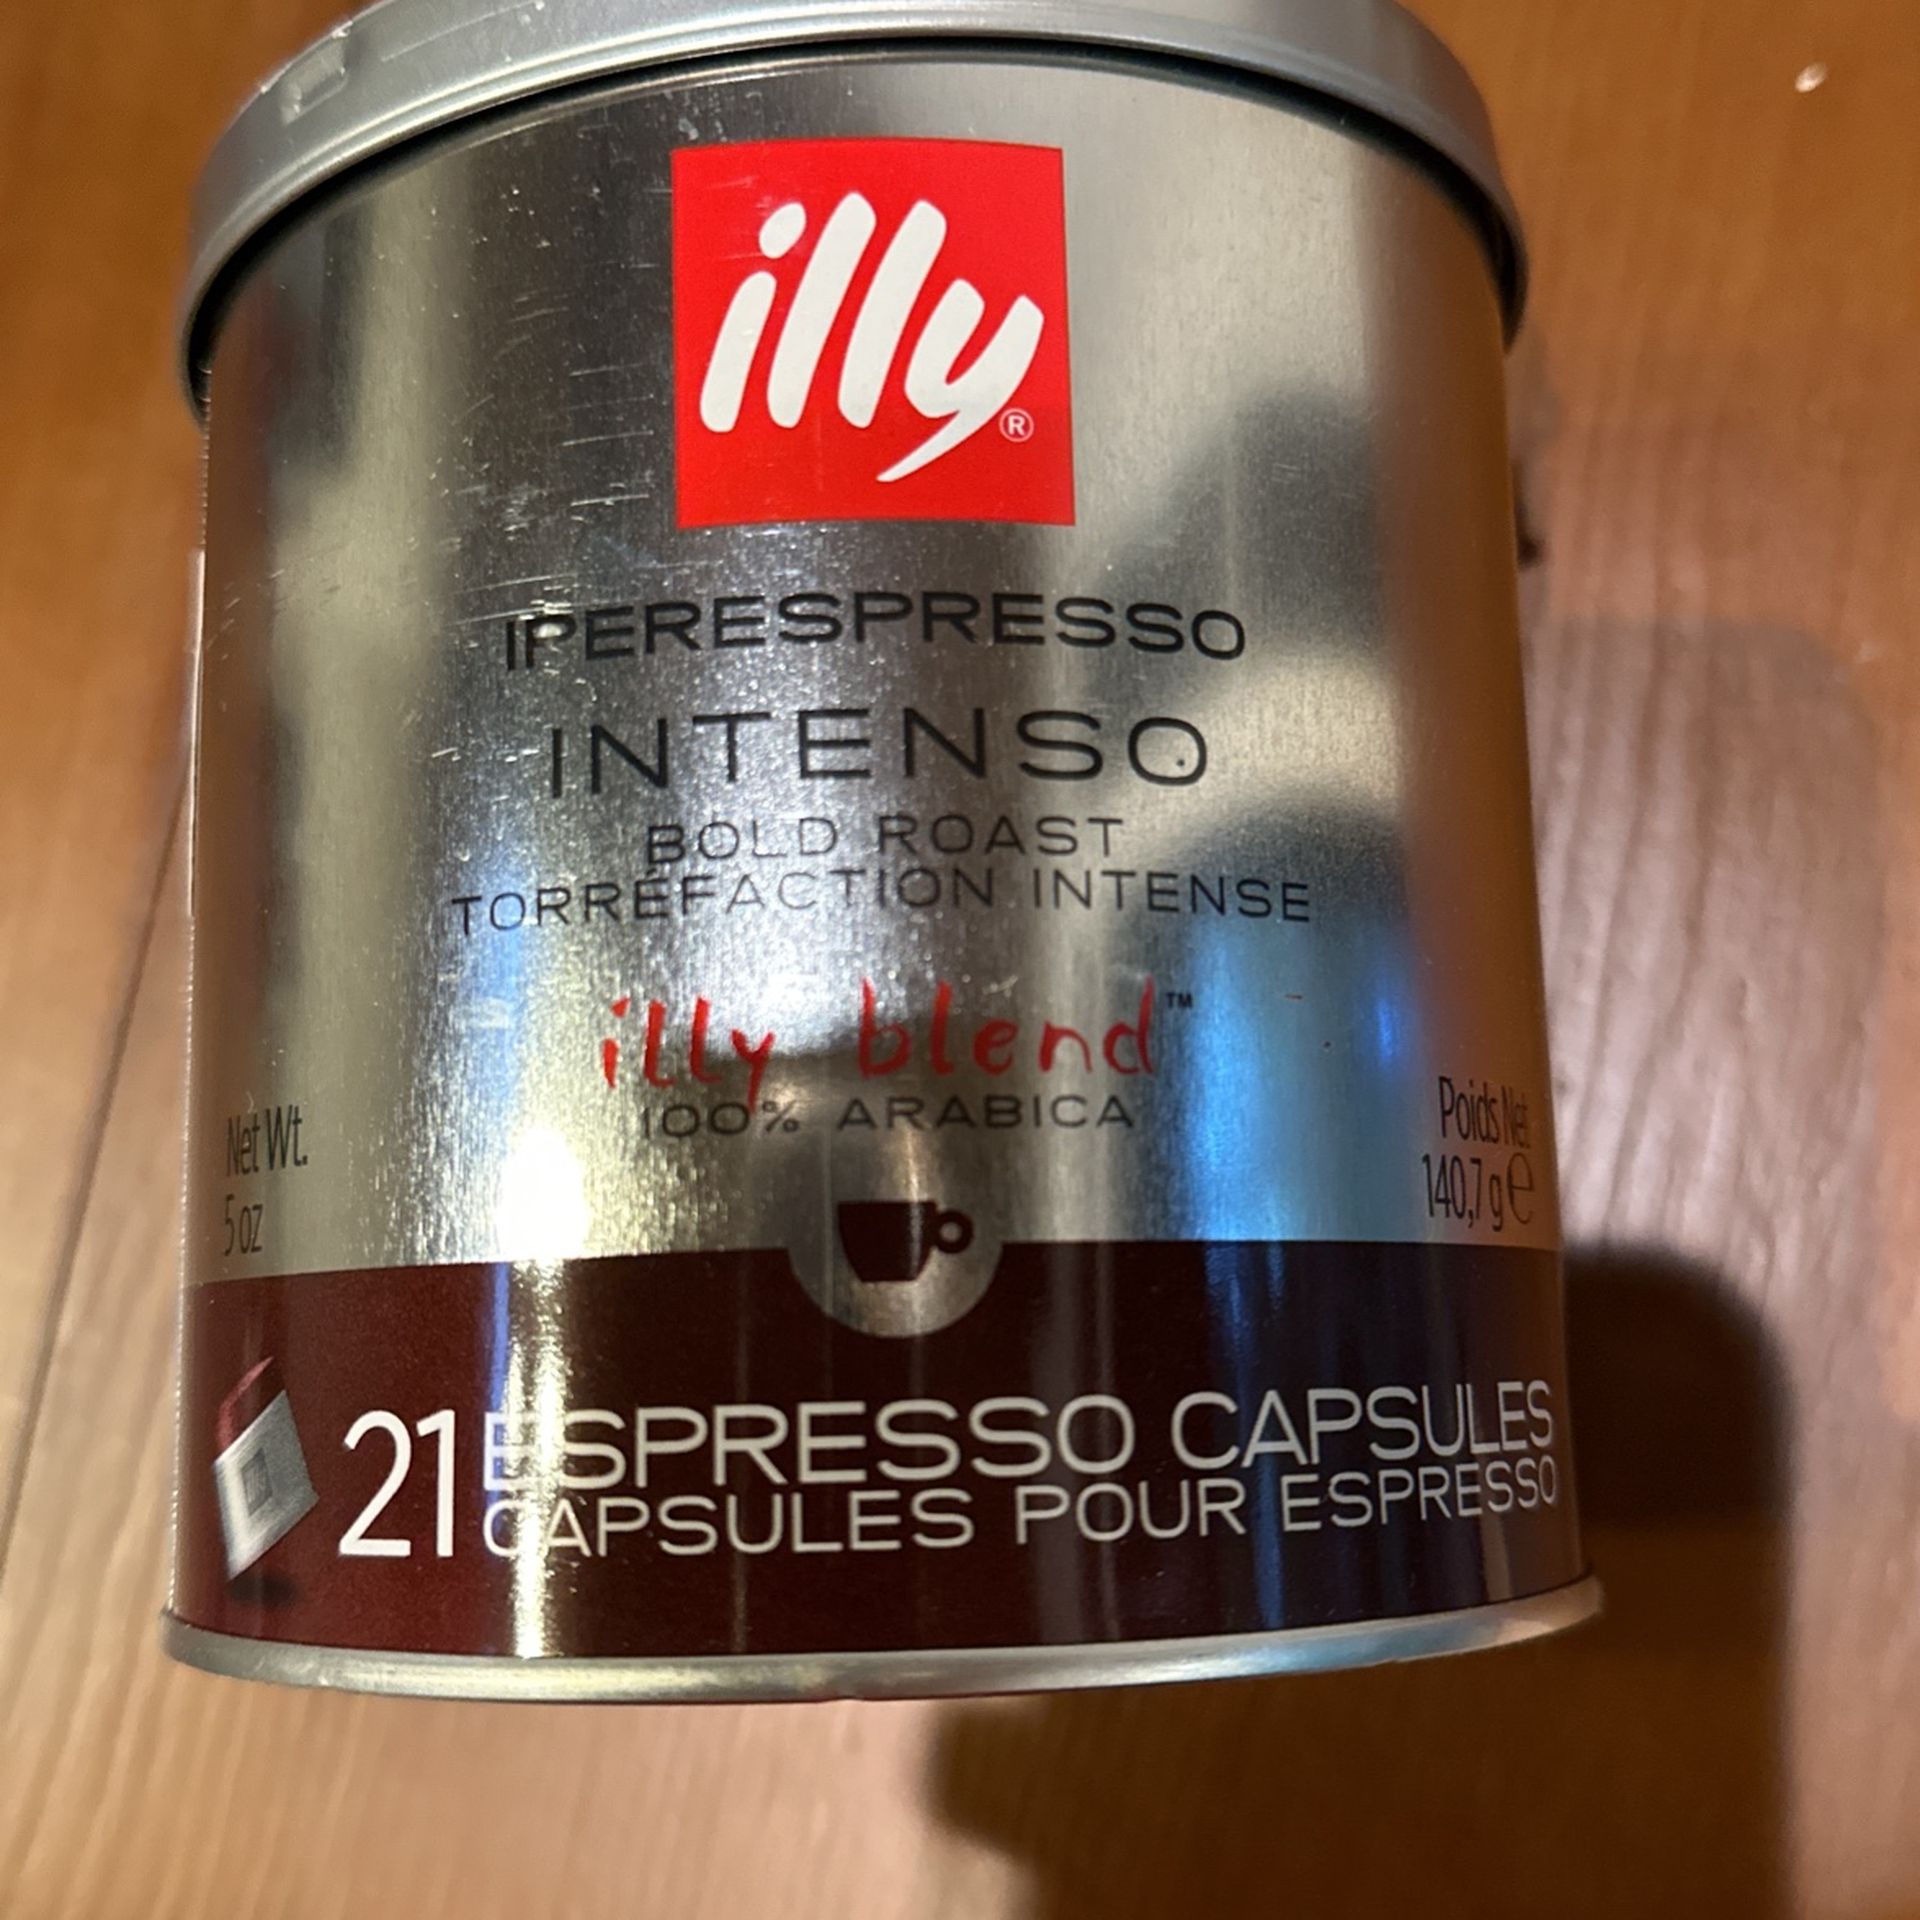 Illy Iperespresso Intense Bold Roast Espresso Capsules 